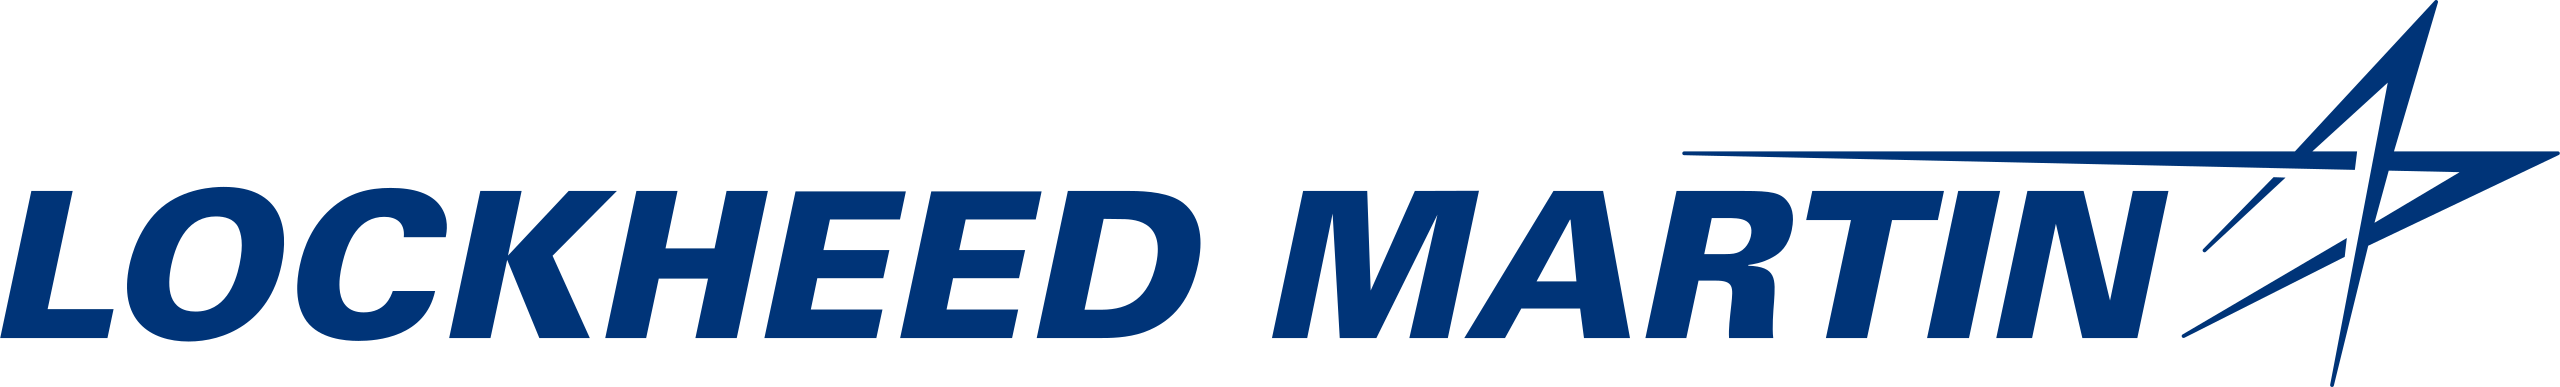 Lockheed_Martin_logo.svg